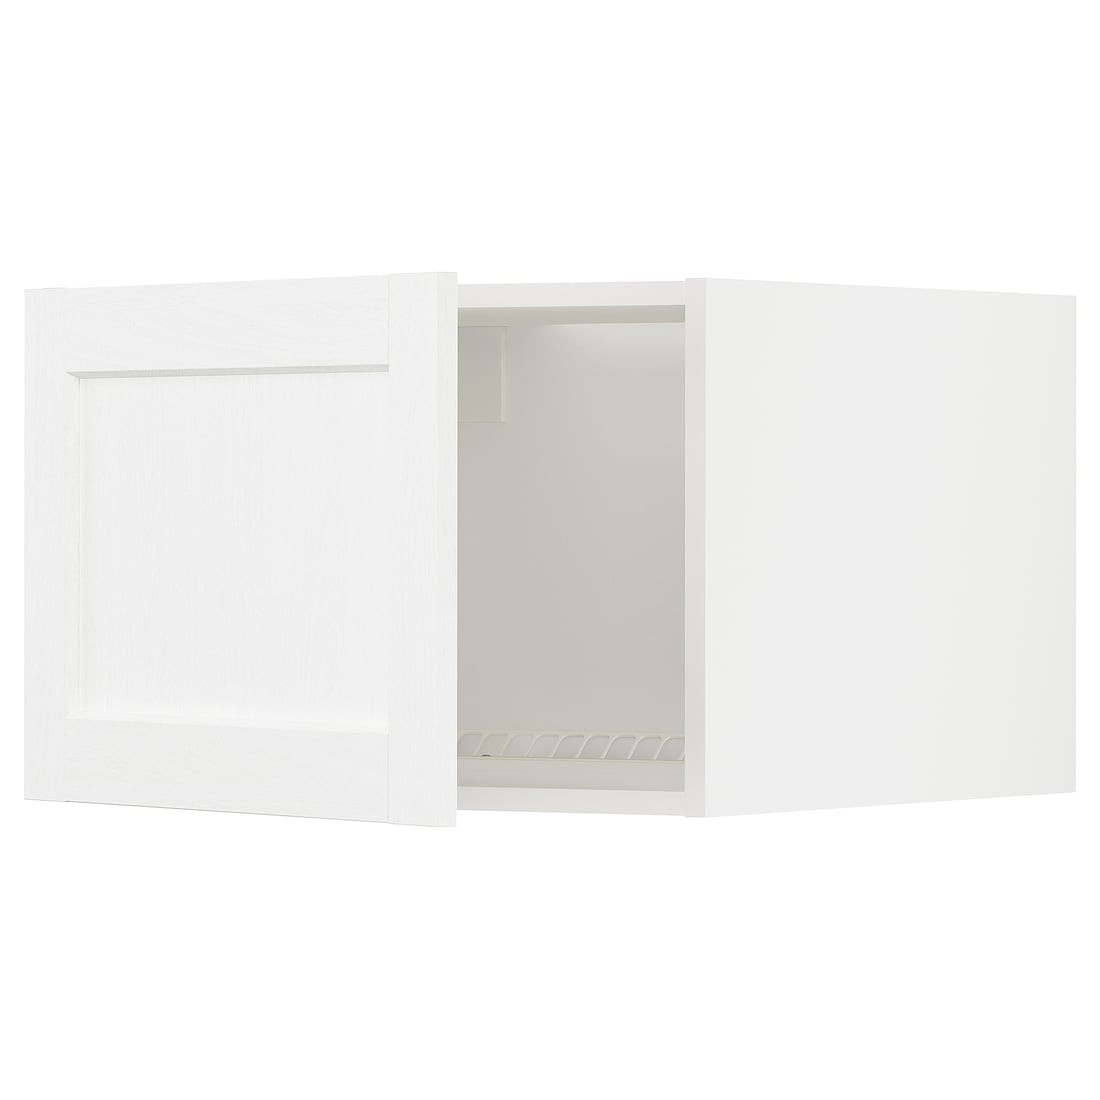 IKEA METOD МЕТОД Верхний шкаф для холодильника / морозильника, белый Enköping / белый имитация дерева, 60x40 см 19473612 194.736.12